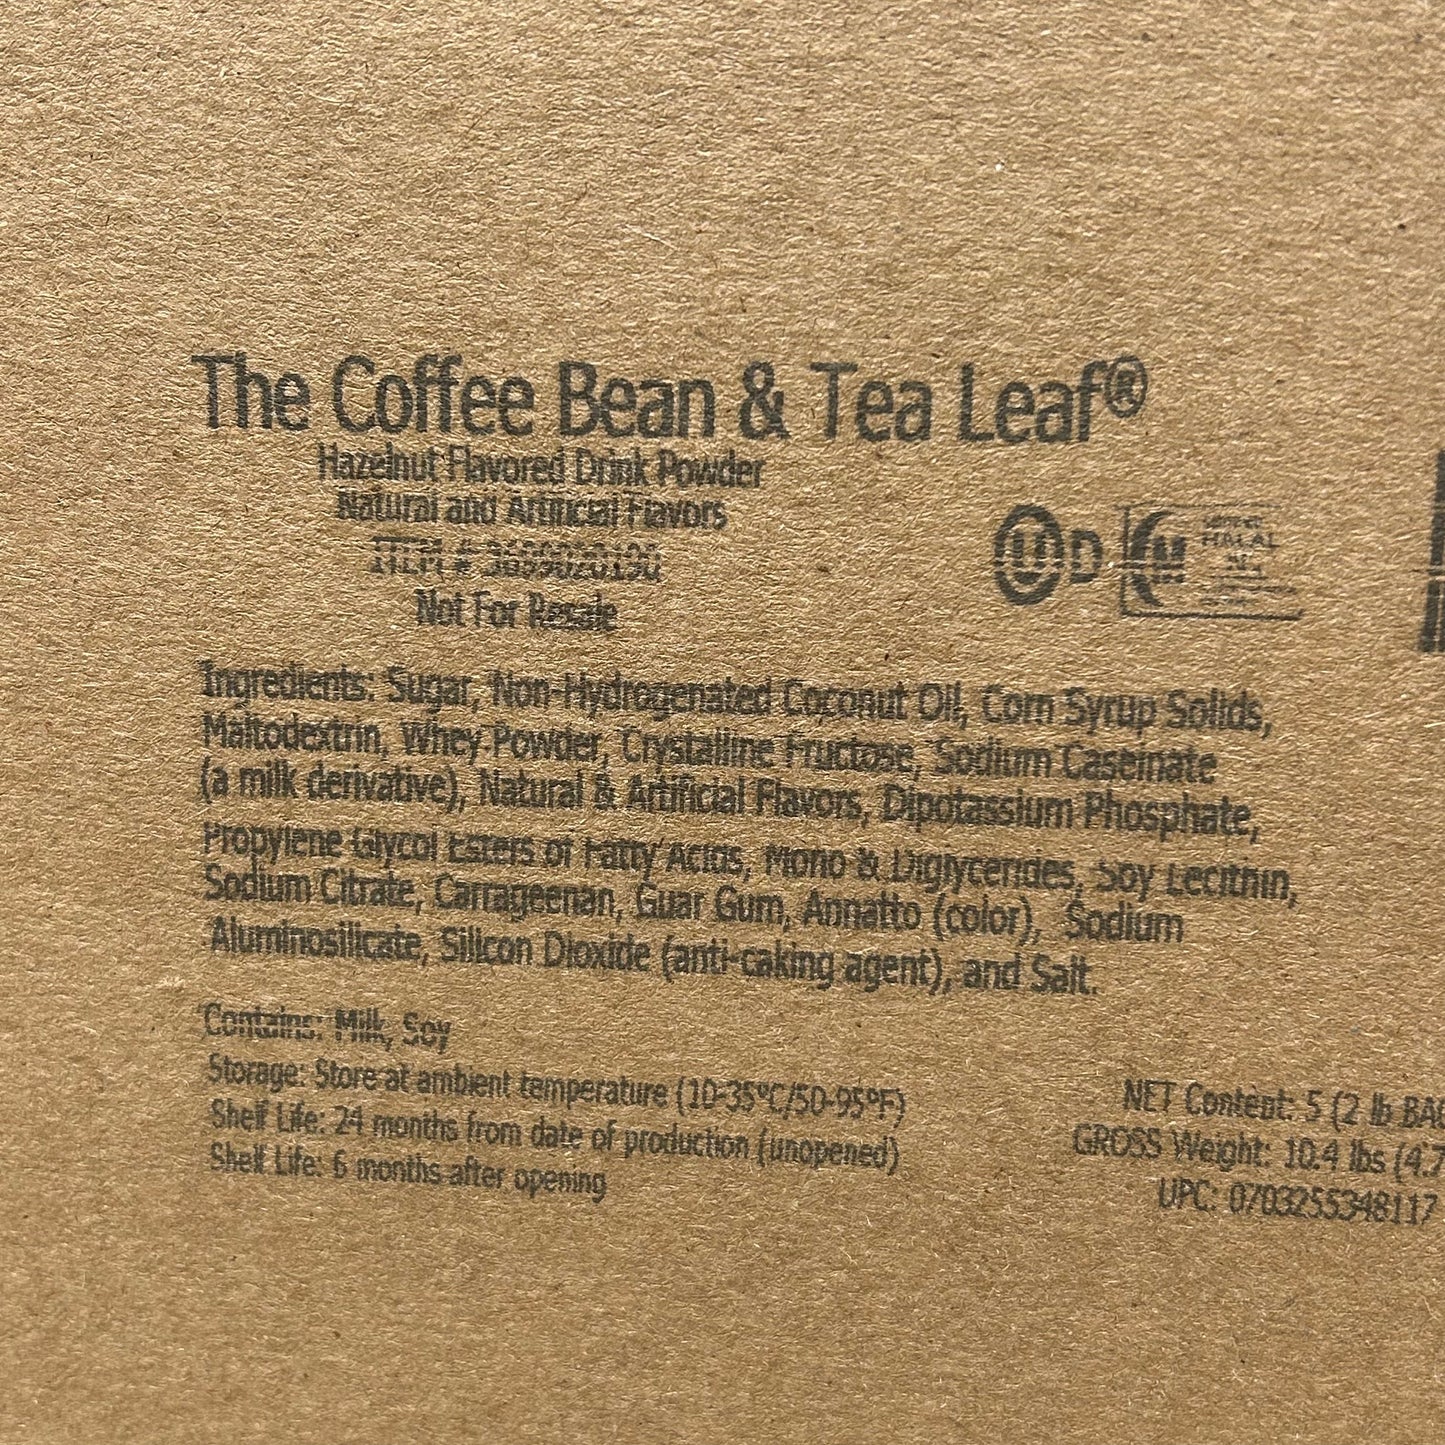 THE COFFEE BEAN & TEA LEAF 5-PACK! Hazelnut Flavored Drink Powder 2 lbs each (New)